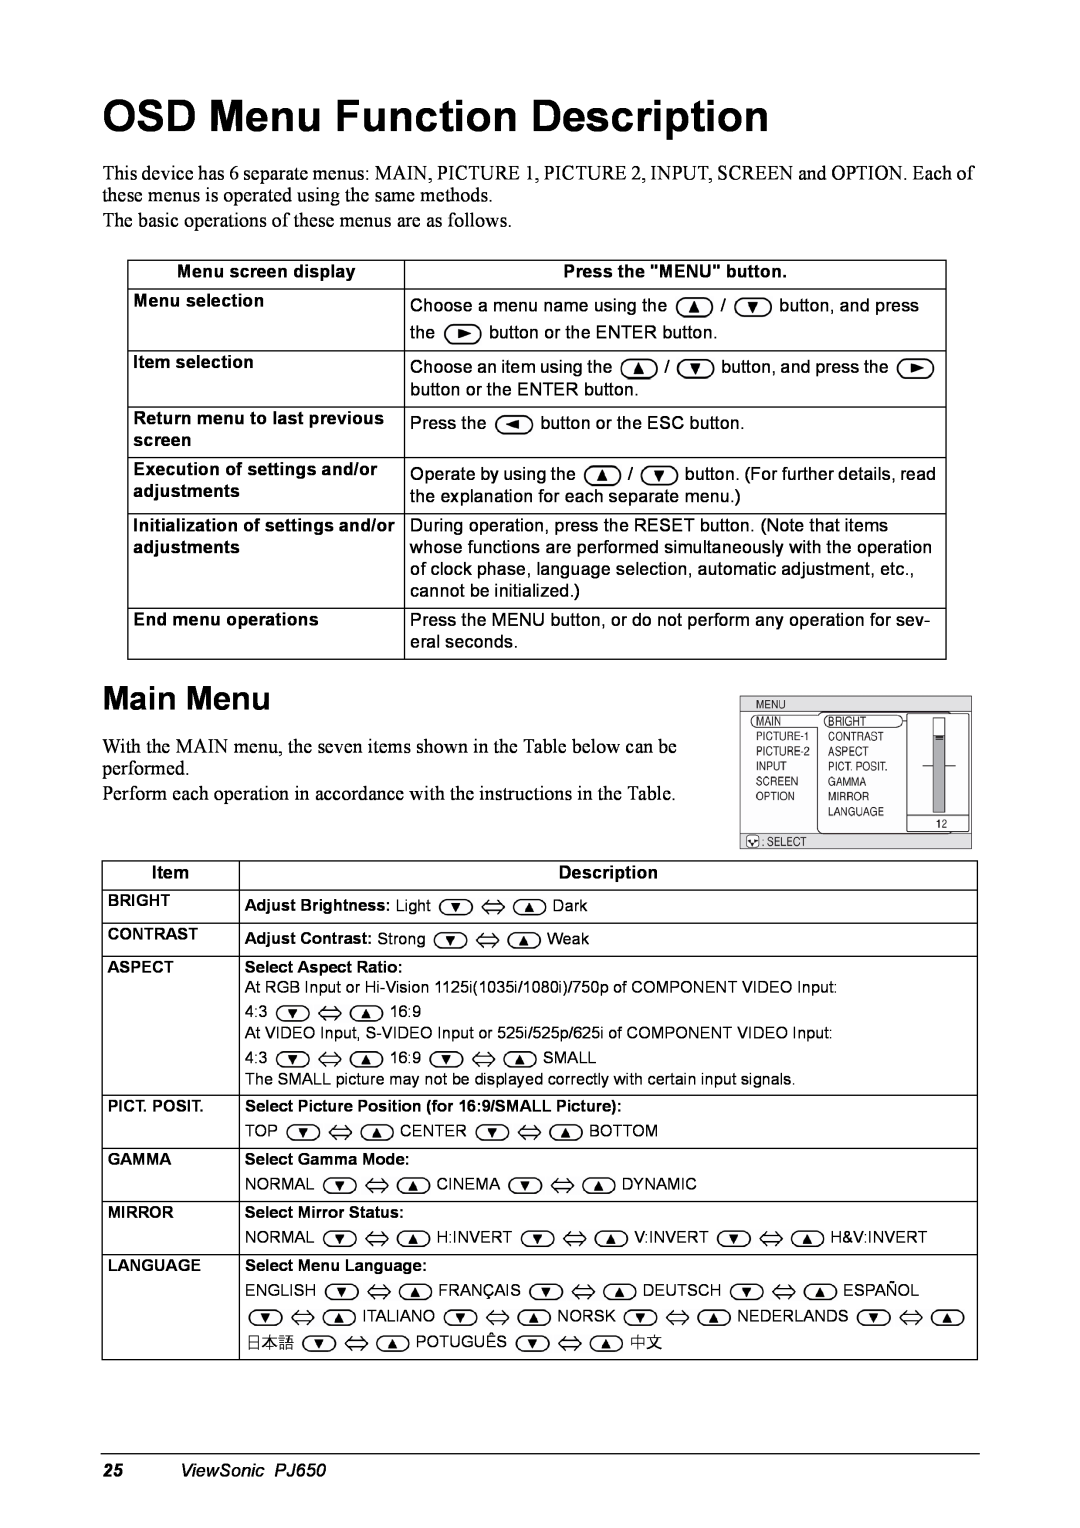 ViewSonic PJ650 manual OSD Menu Function Description, Main Menu 